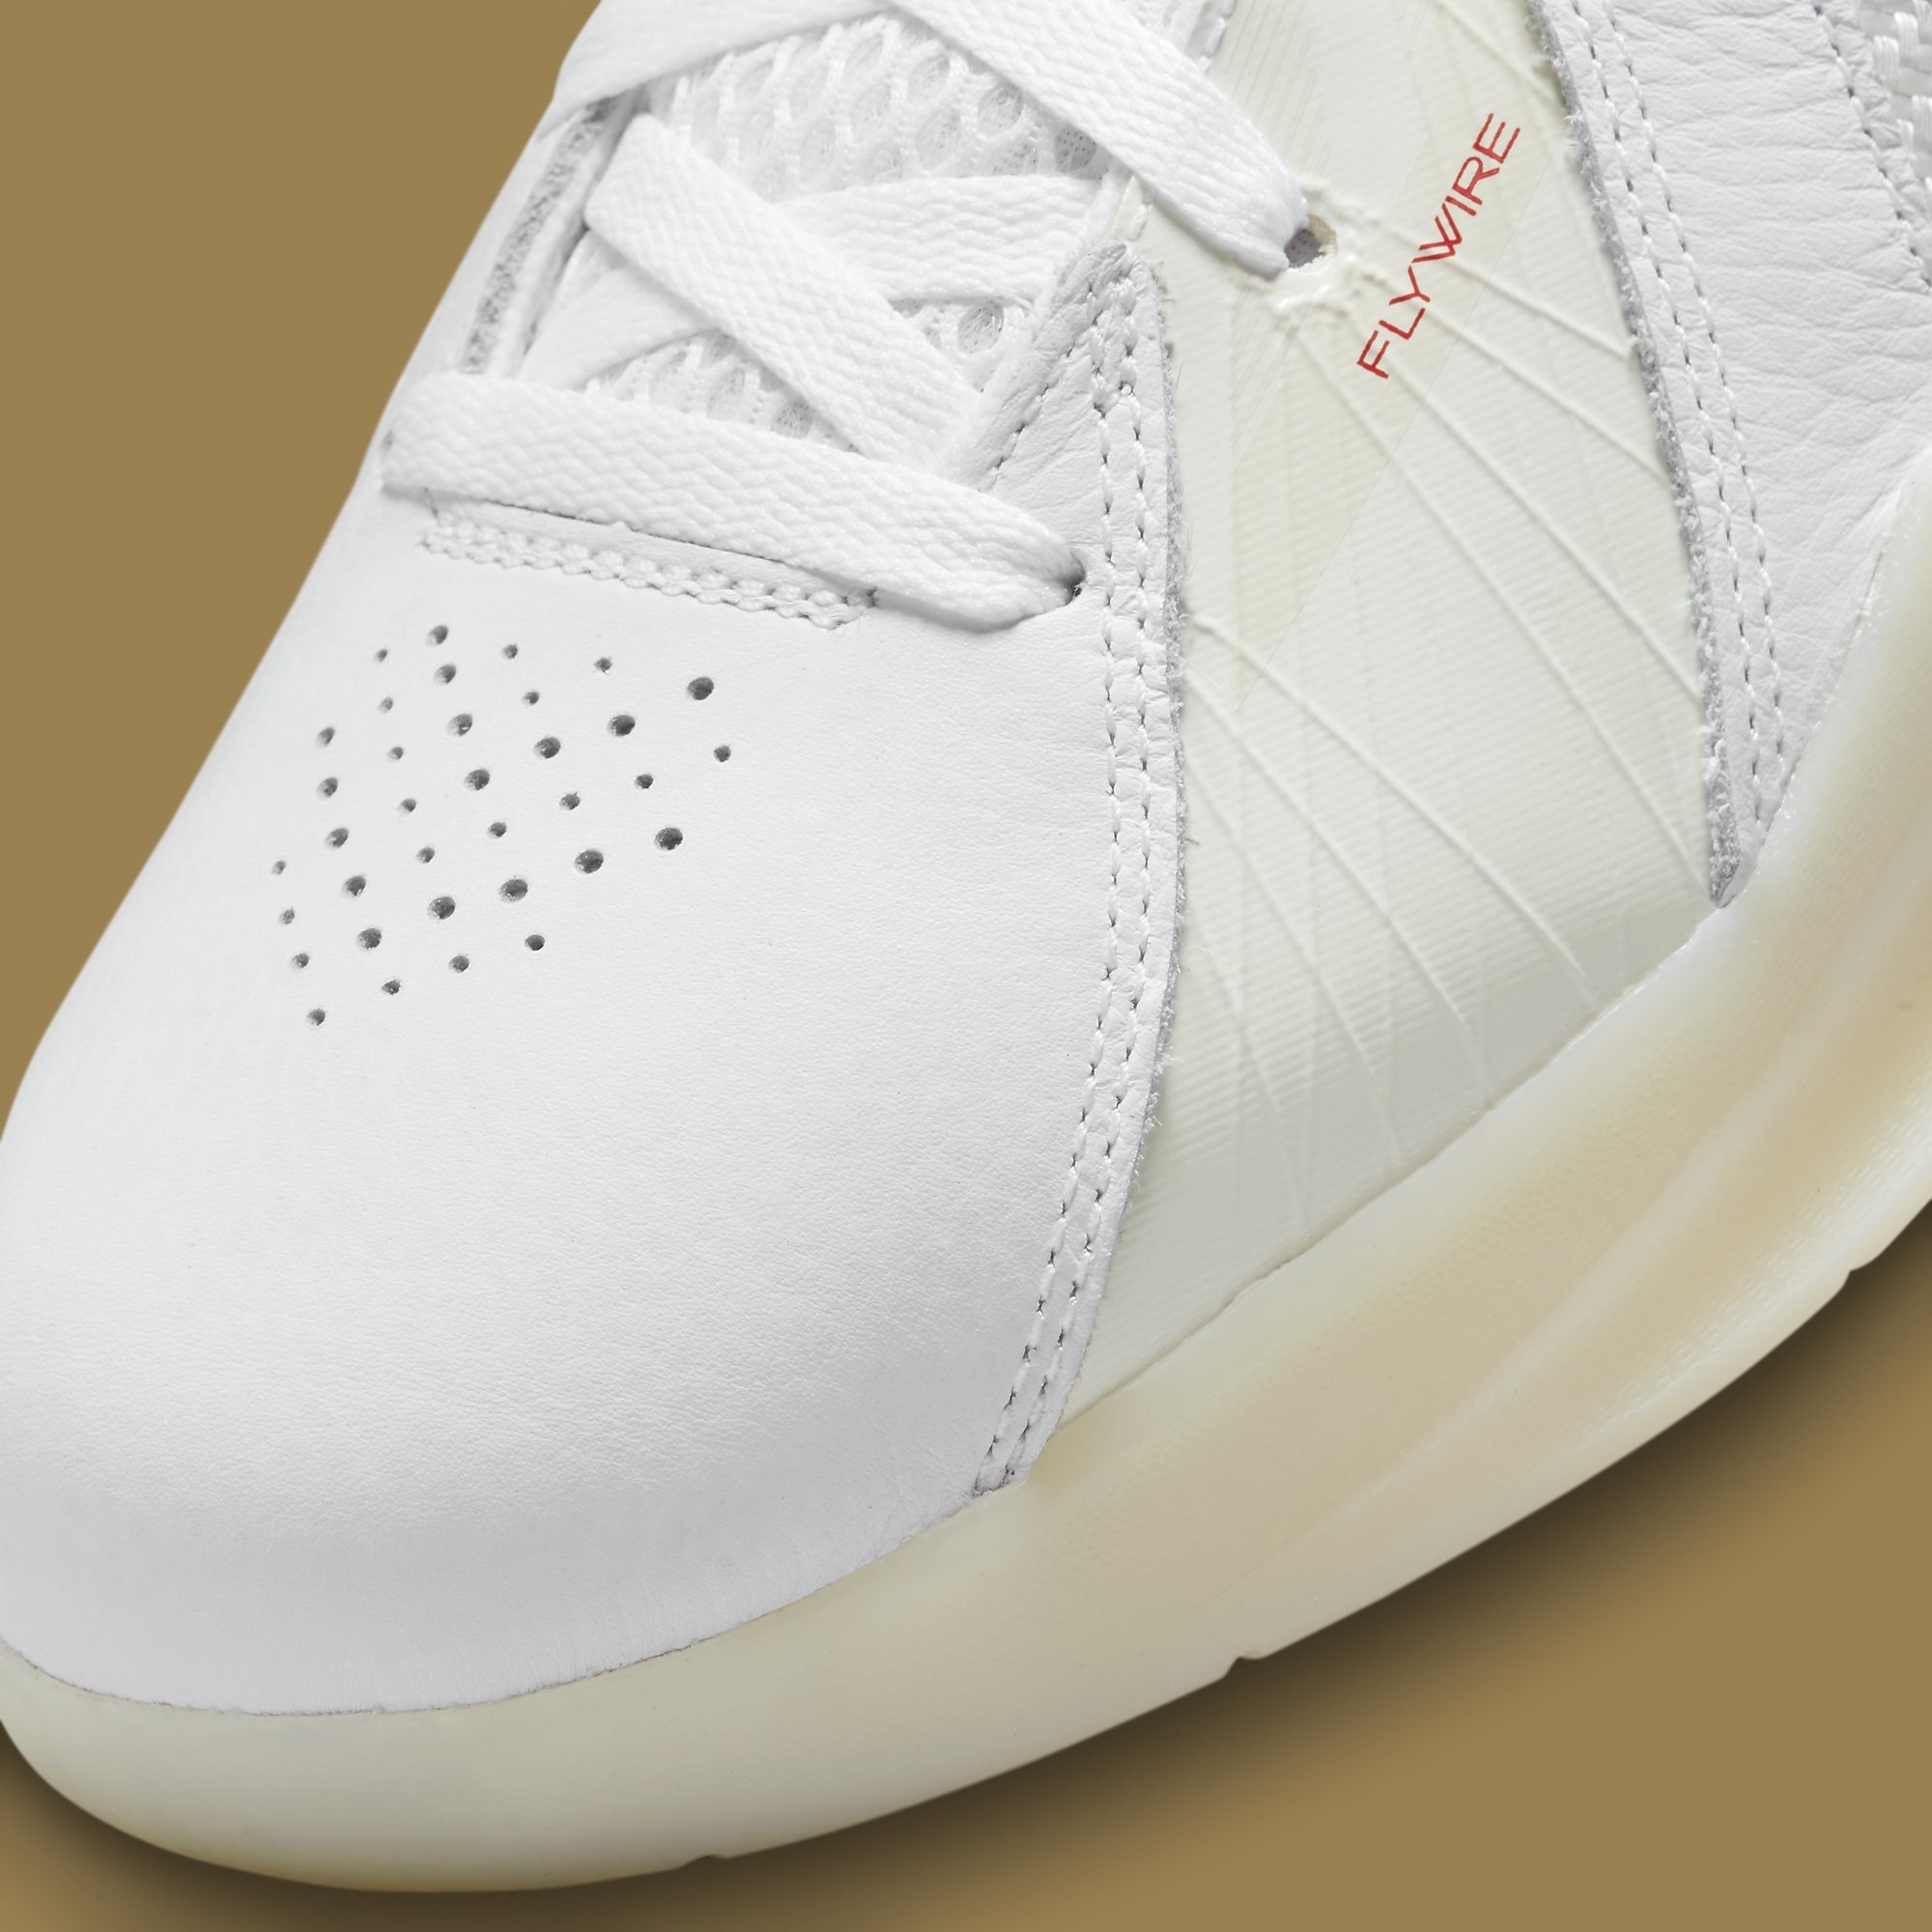 Nike KD 3 III White Gold Release Date DZ3009-100 Toe Detail